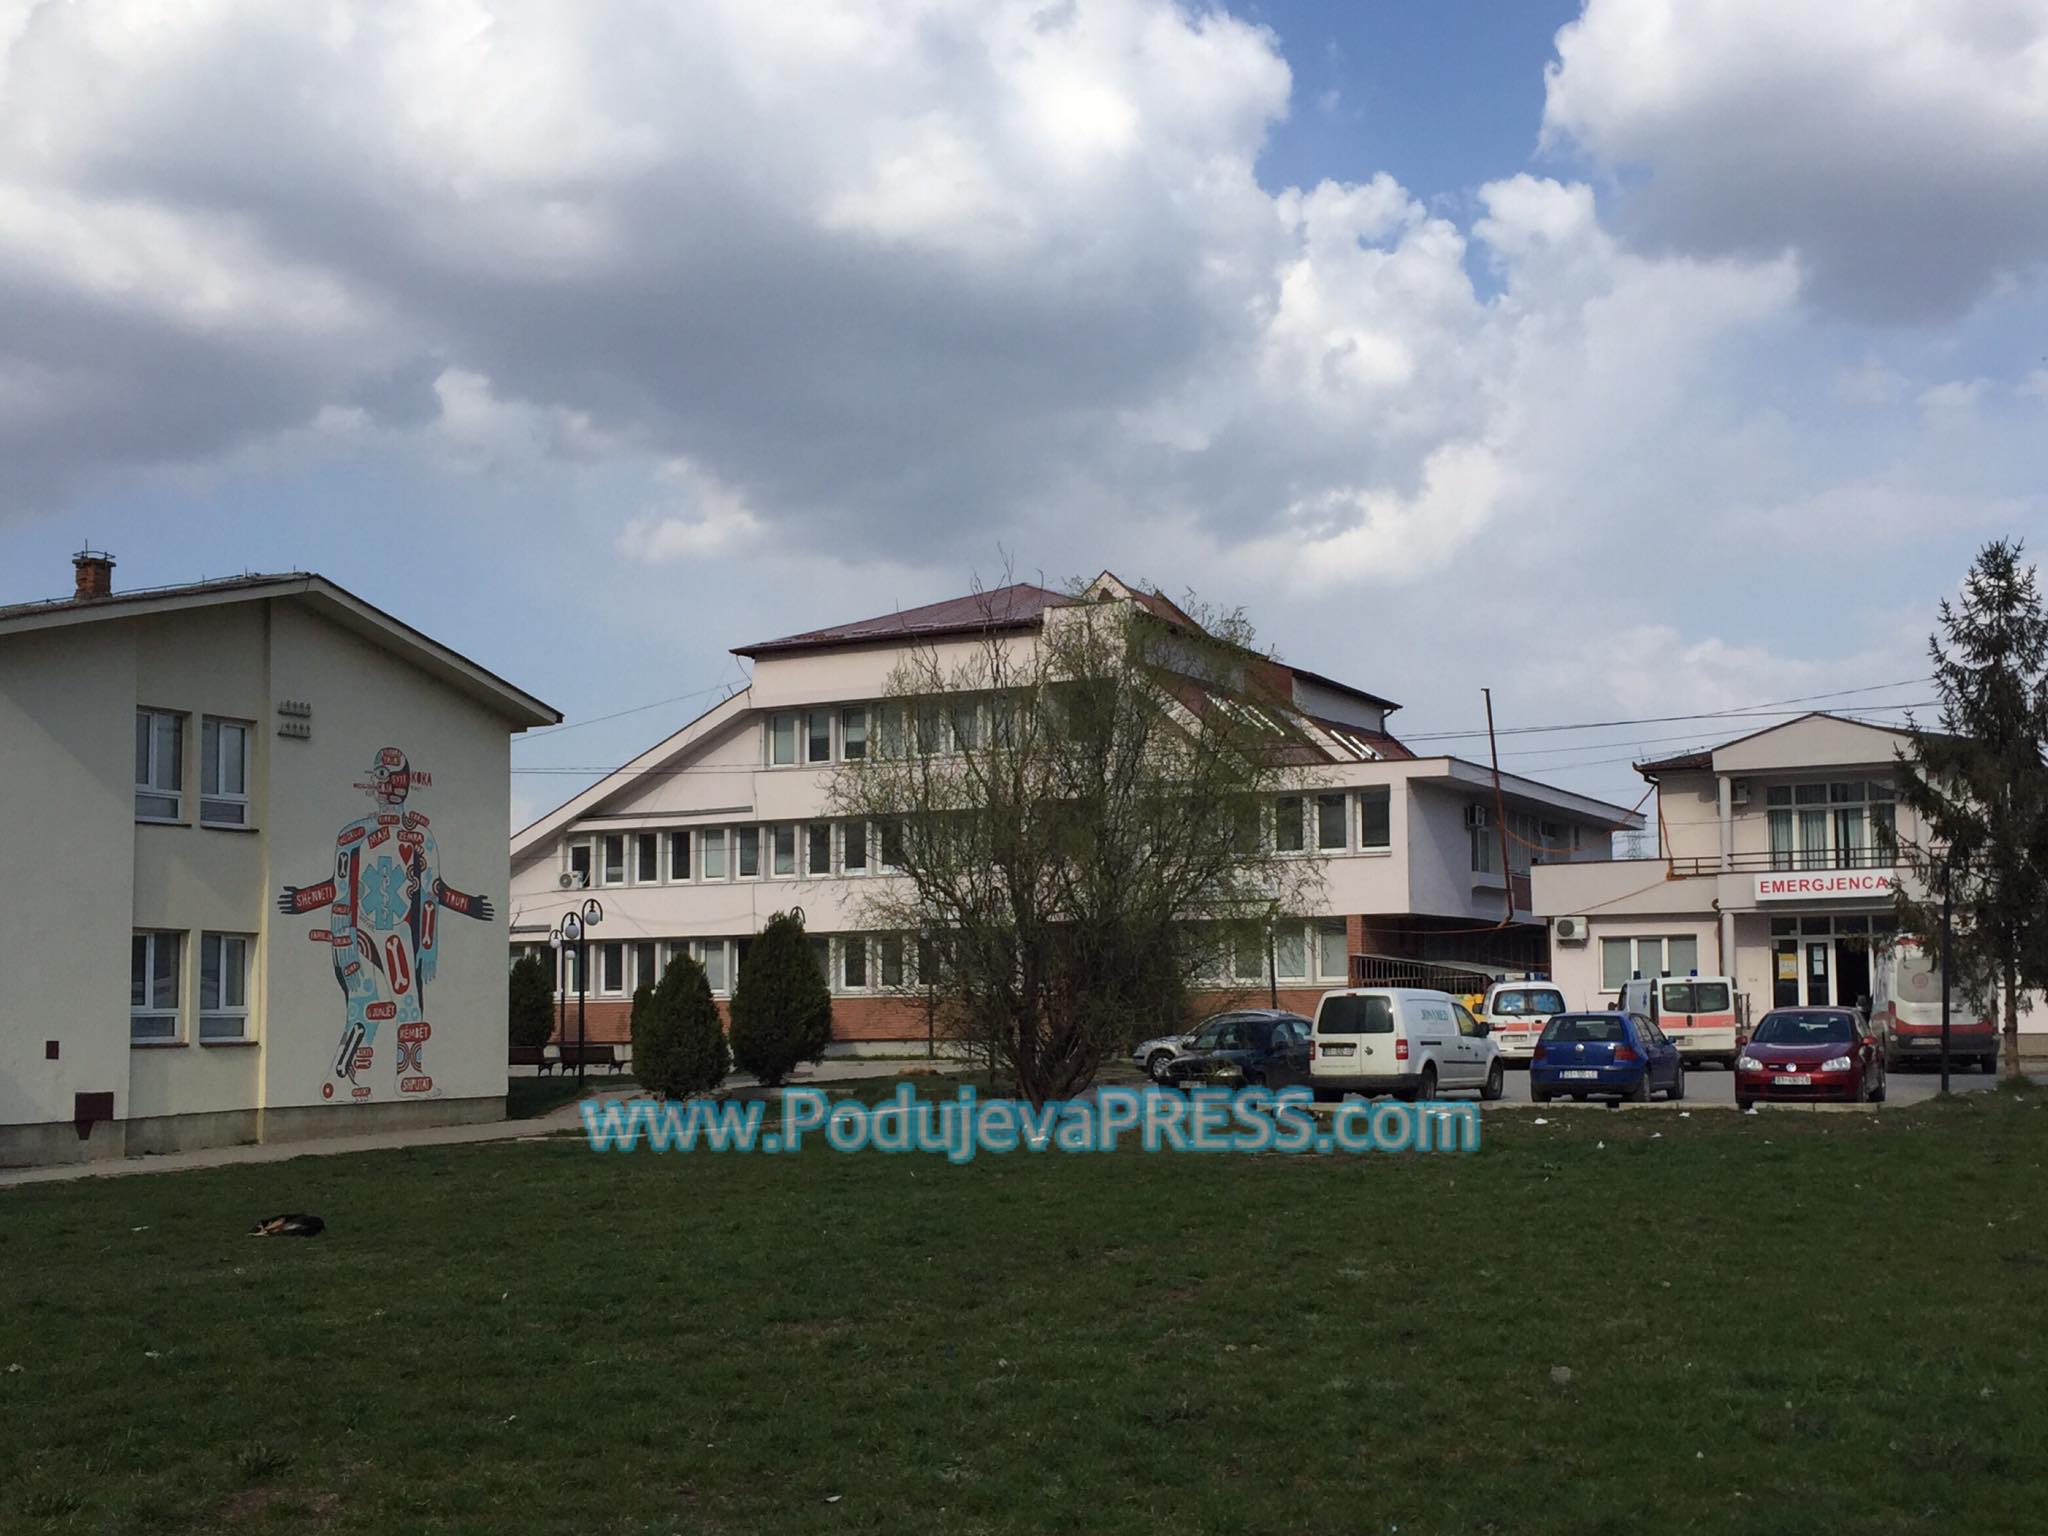  Së shpejti funksionalizohet Spitali i Podujevës